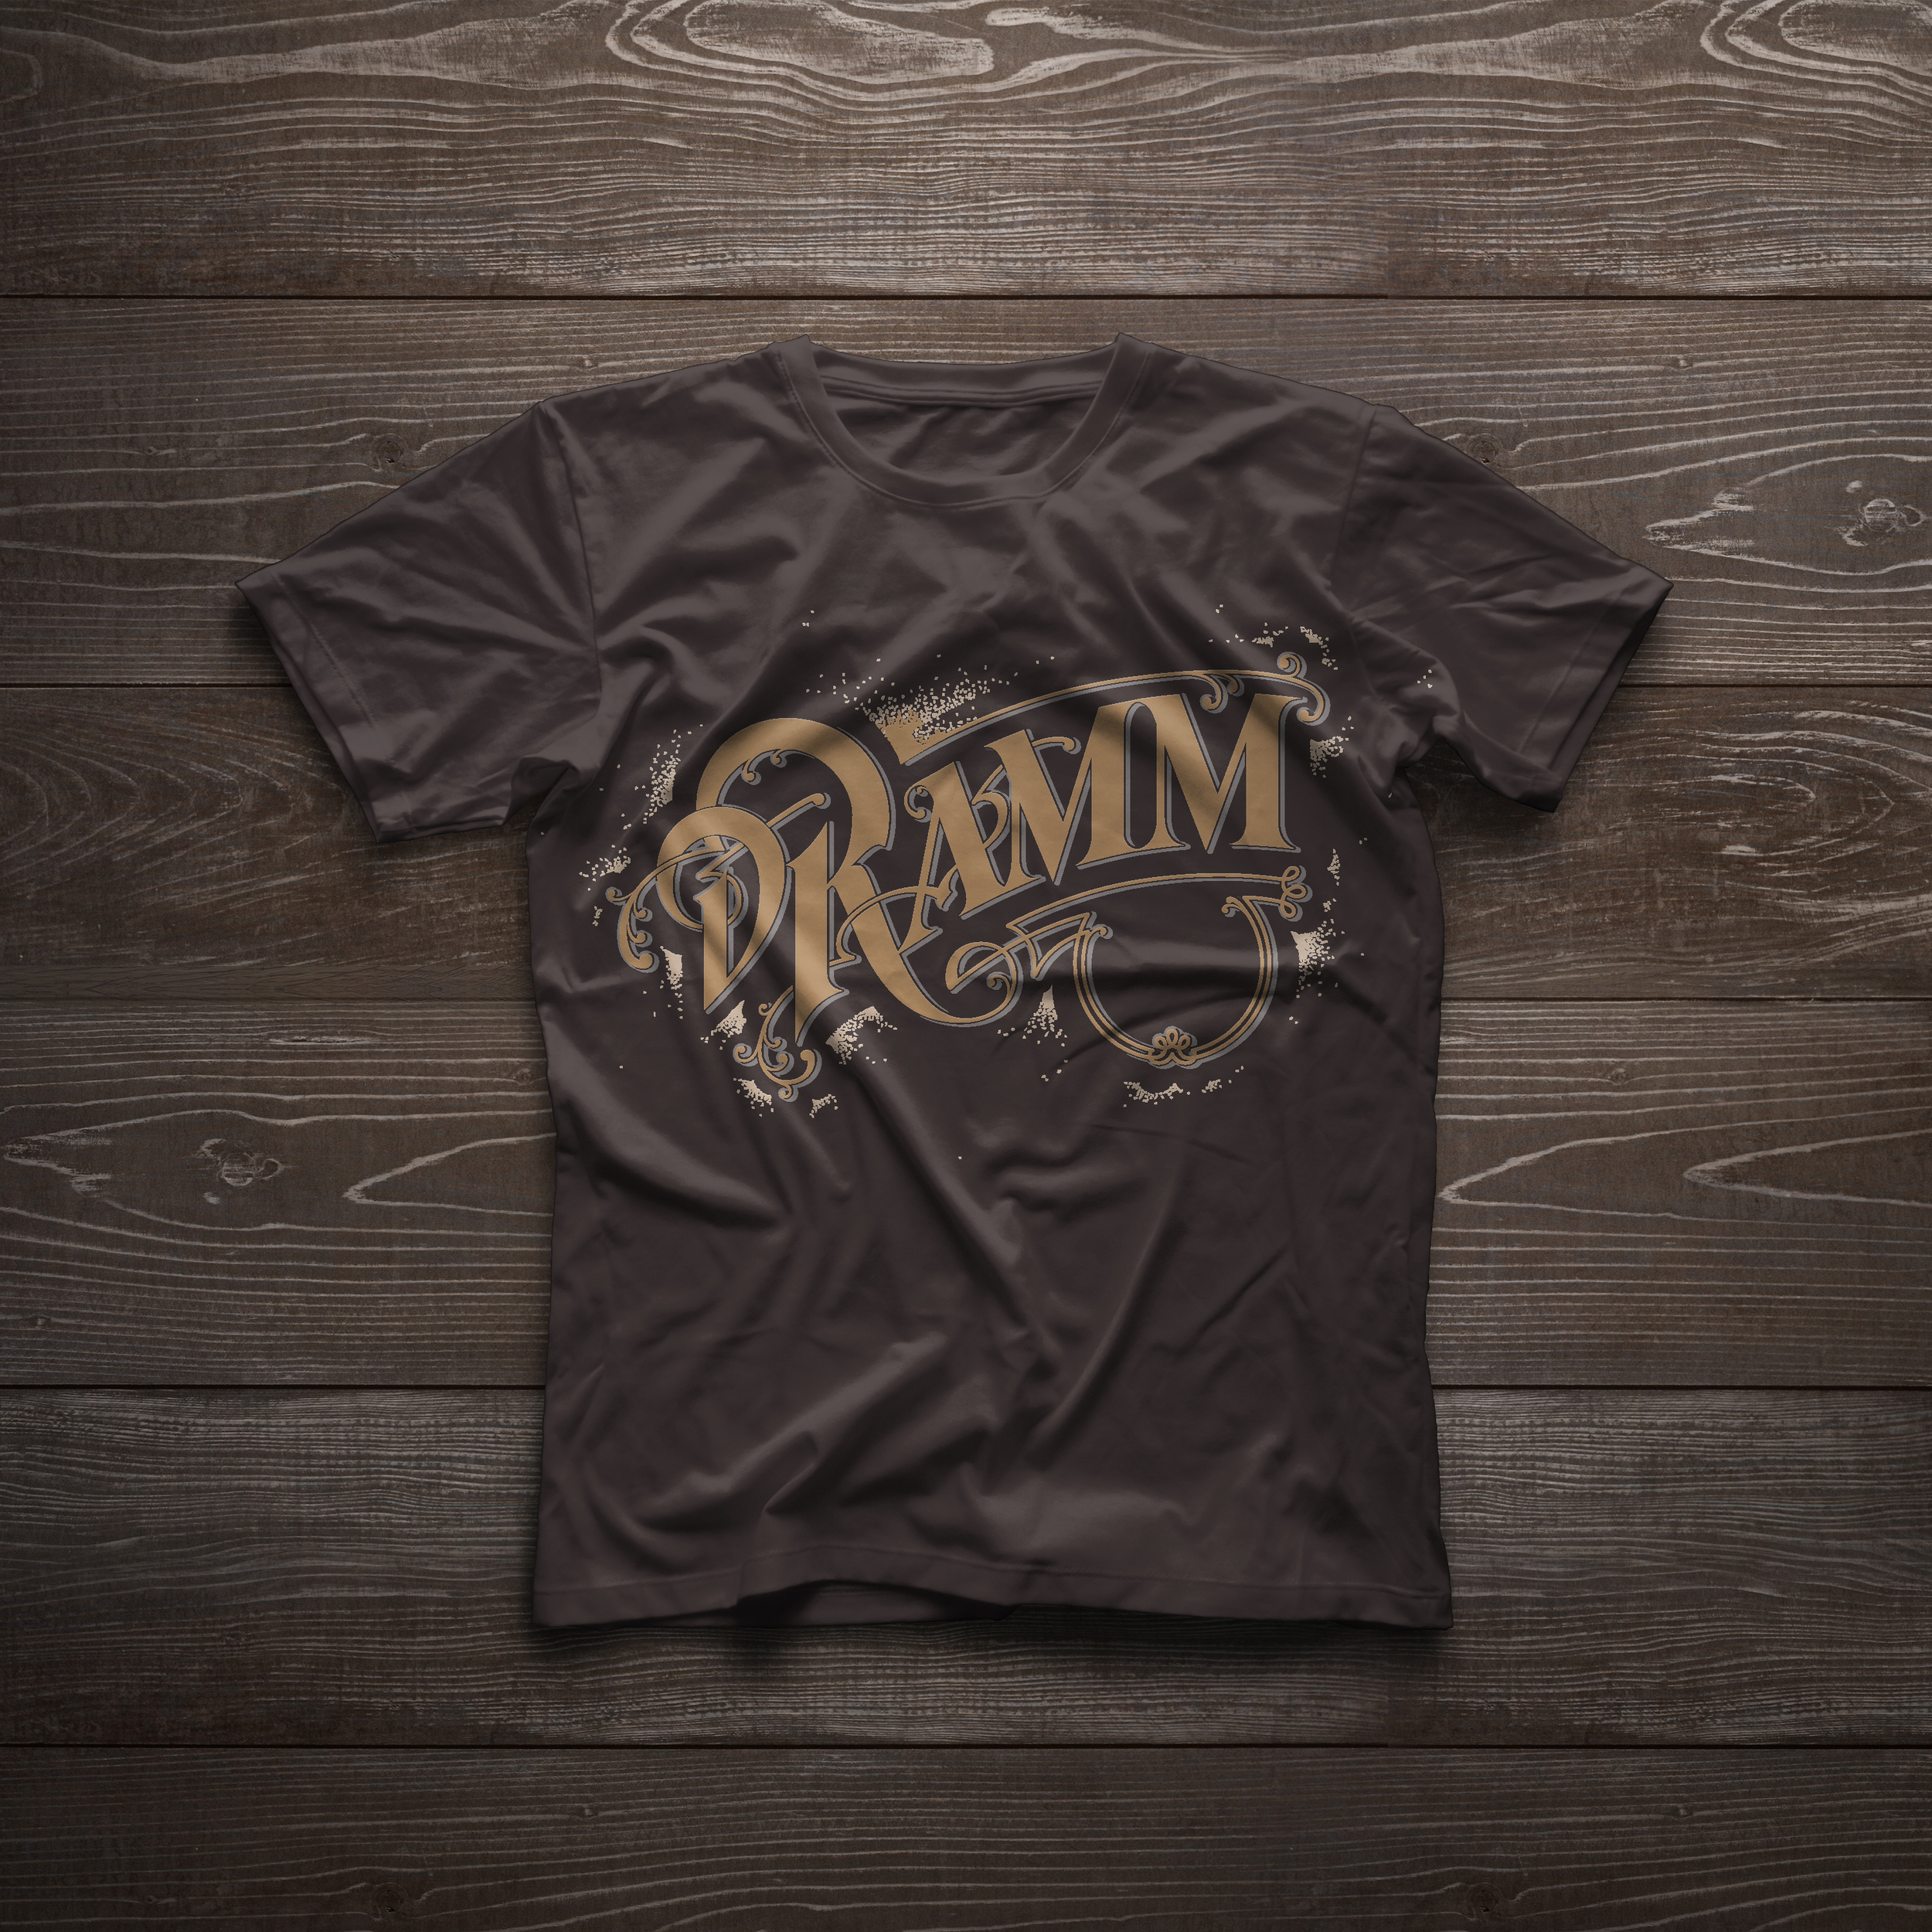 dRamm-T-Shirt-Mock-up-Front.jpg